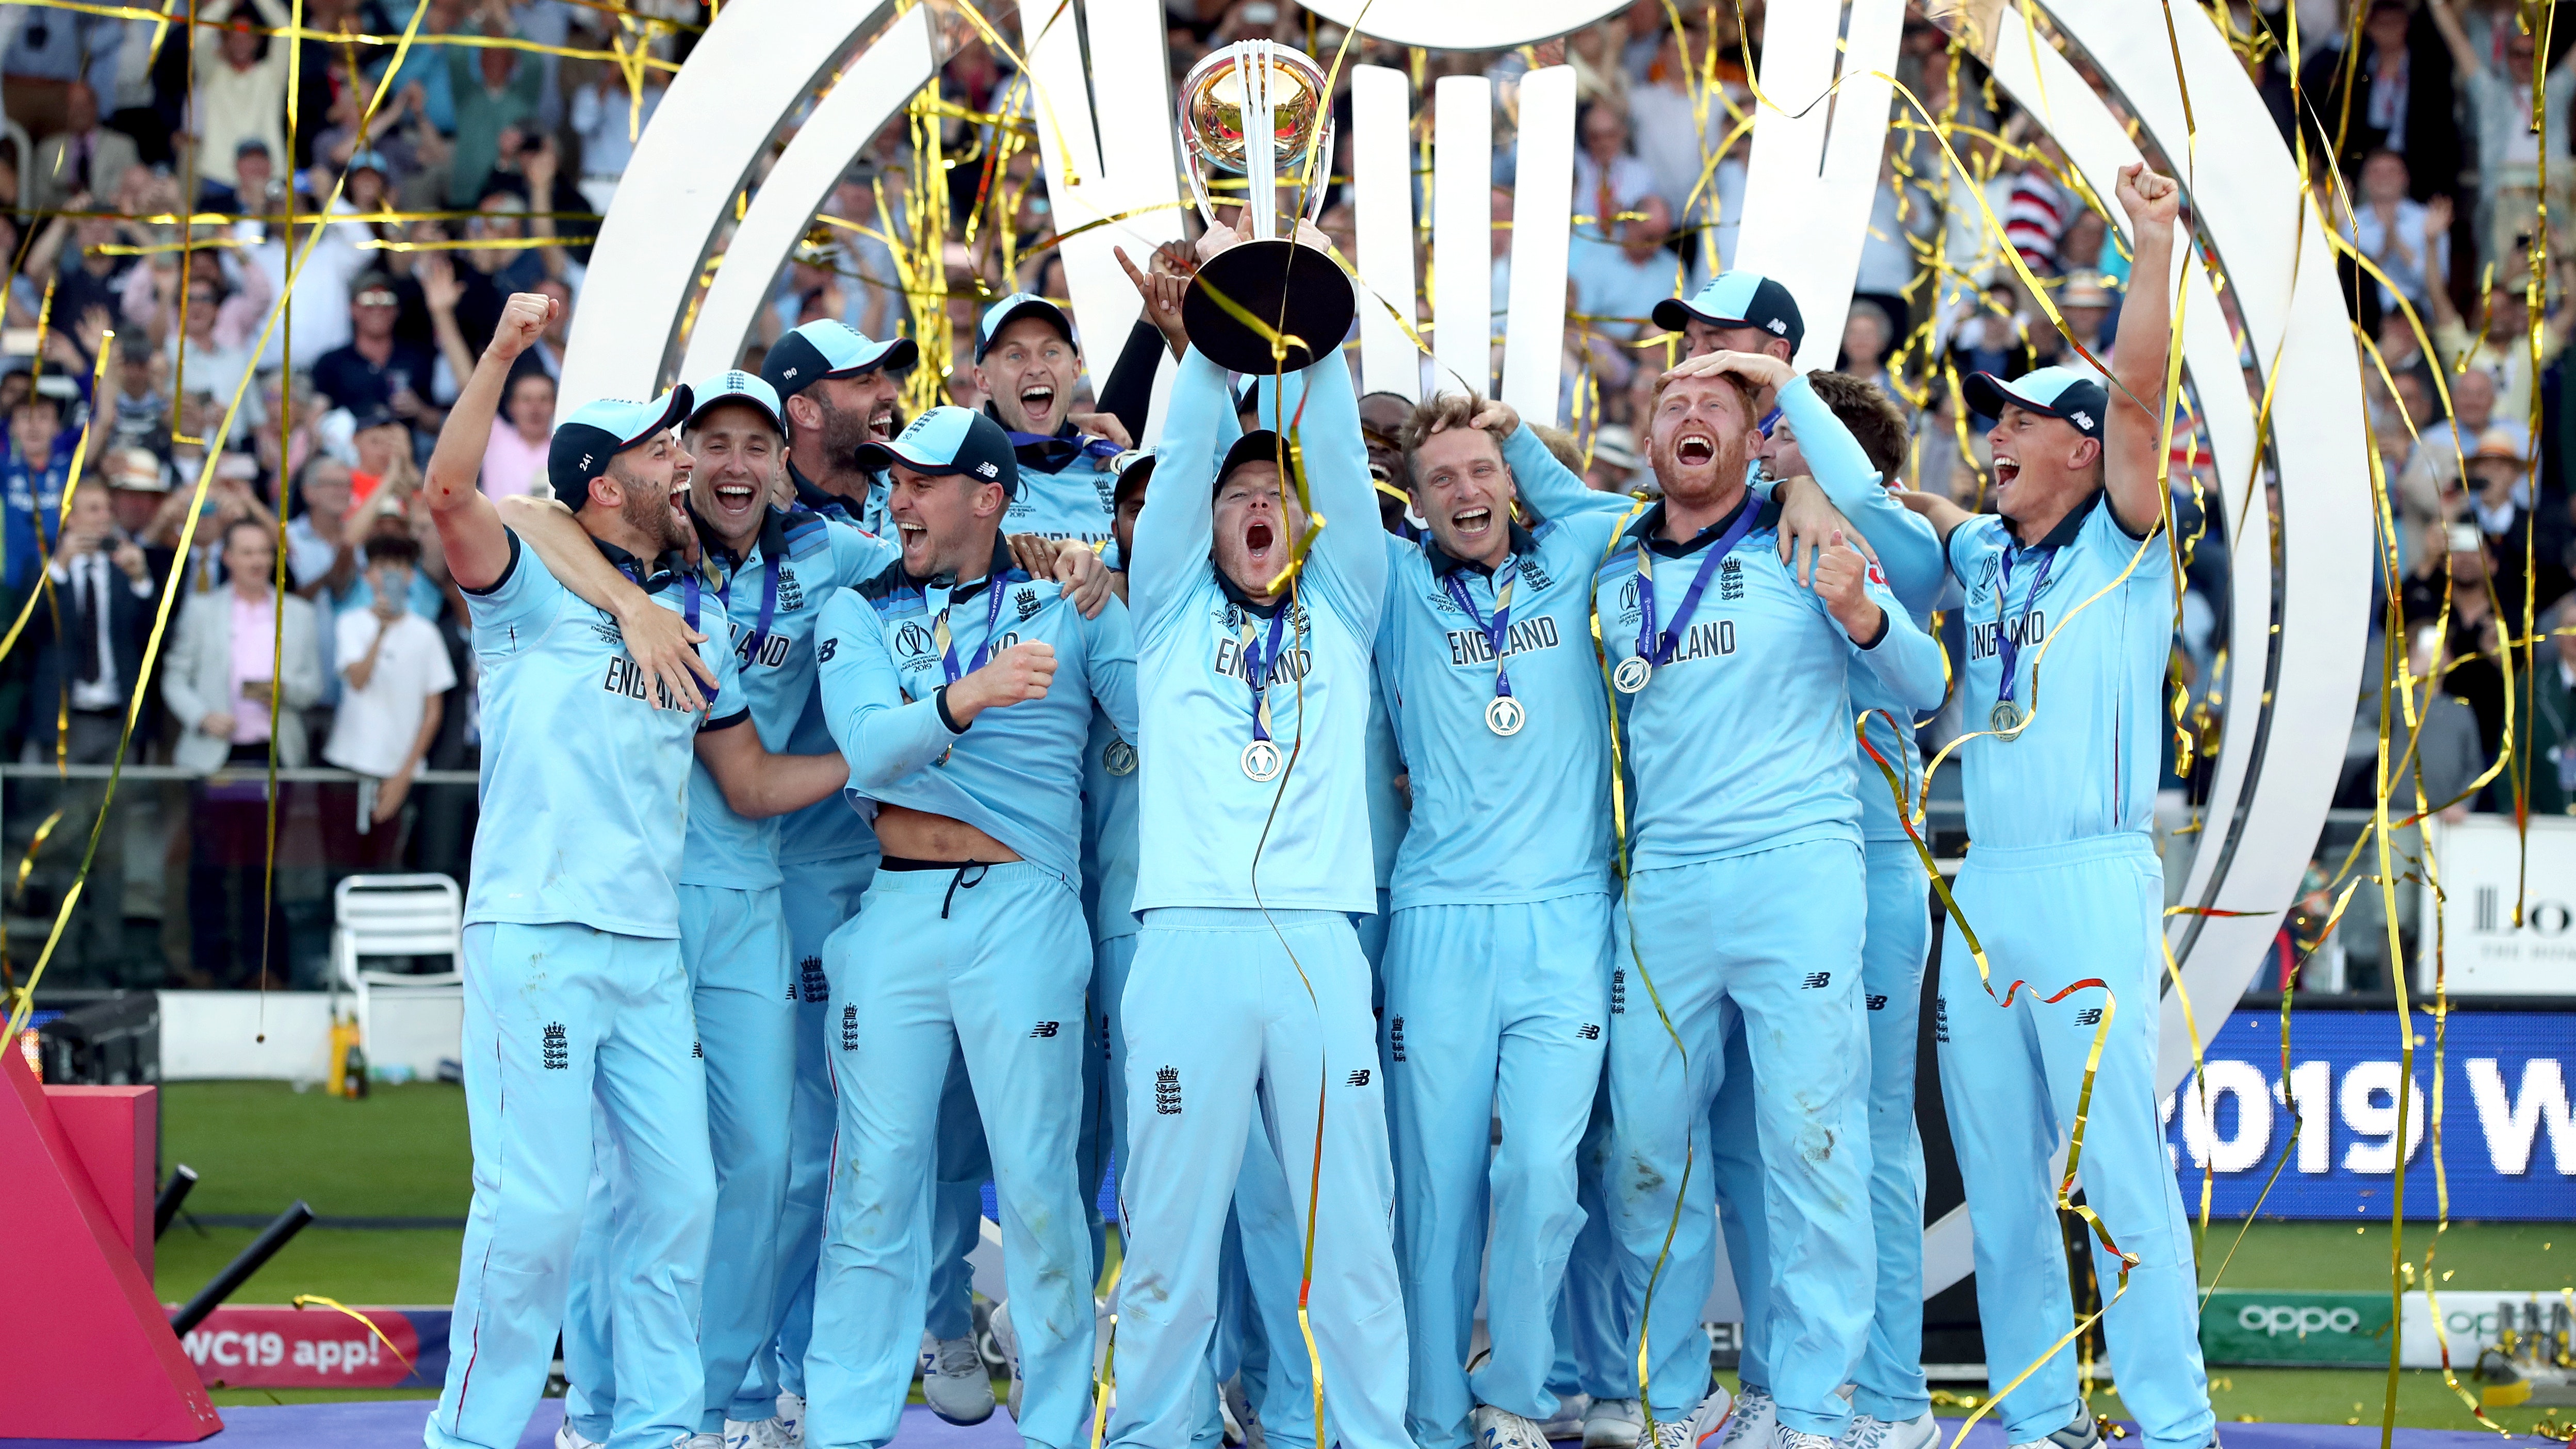 Queen congratulates England cricket team after World Cup victory | BT